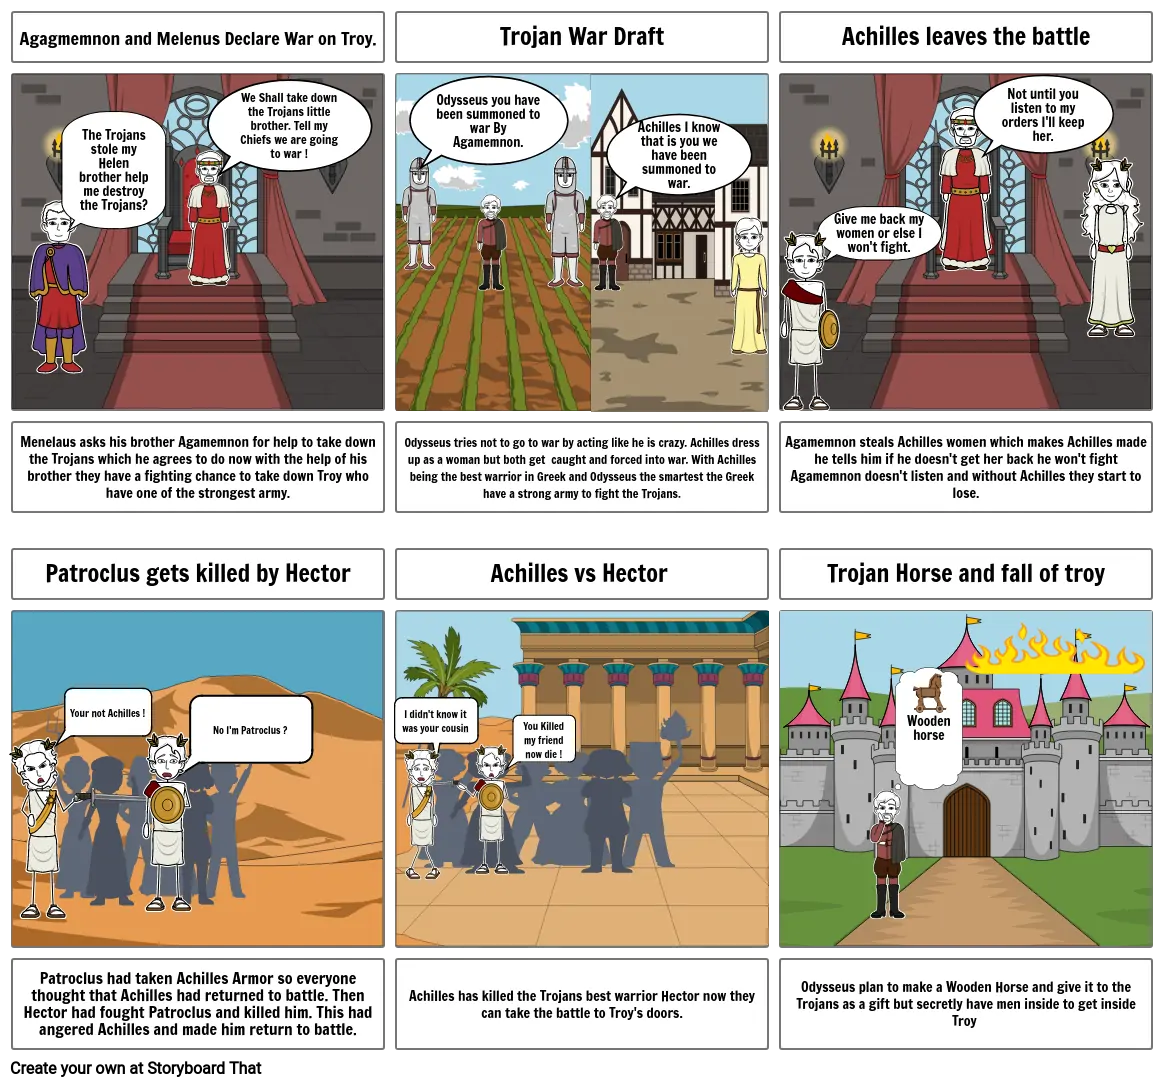 8 Major Events of The Trojan War